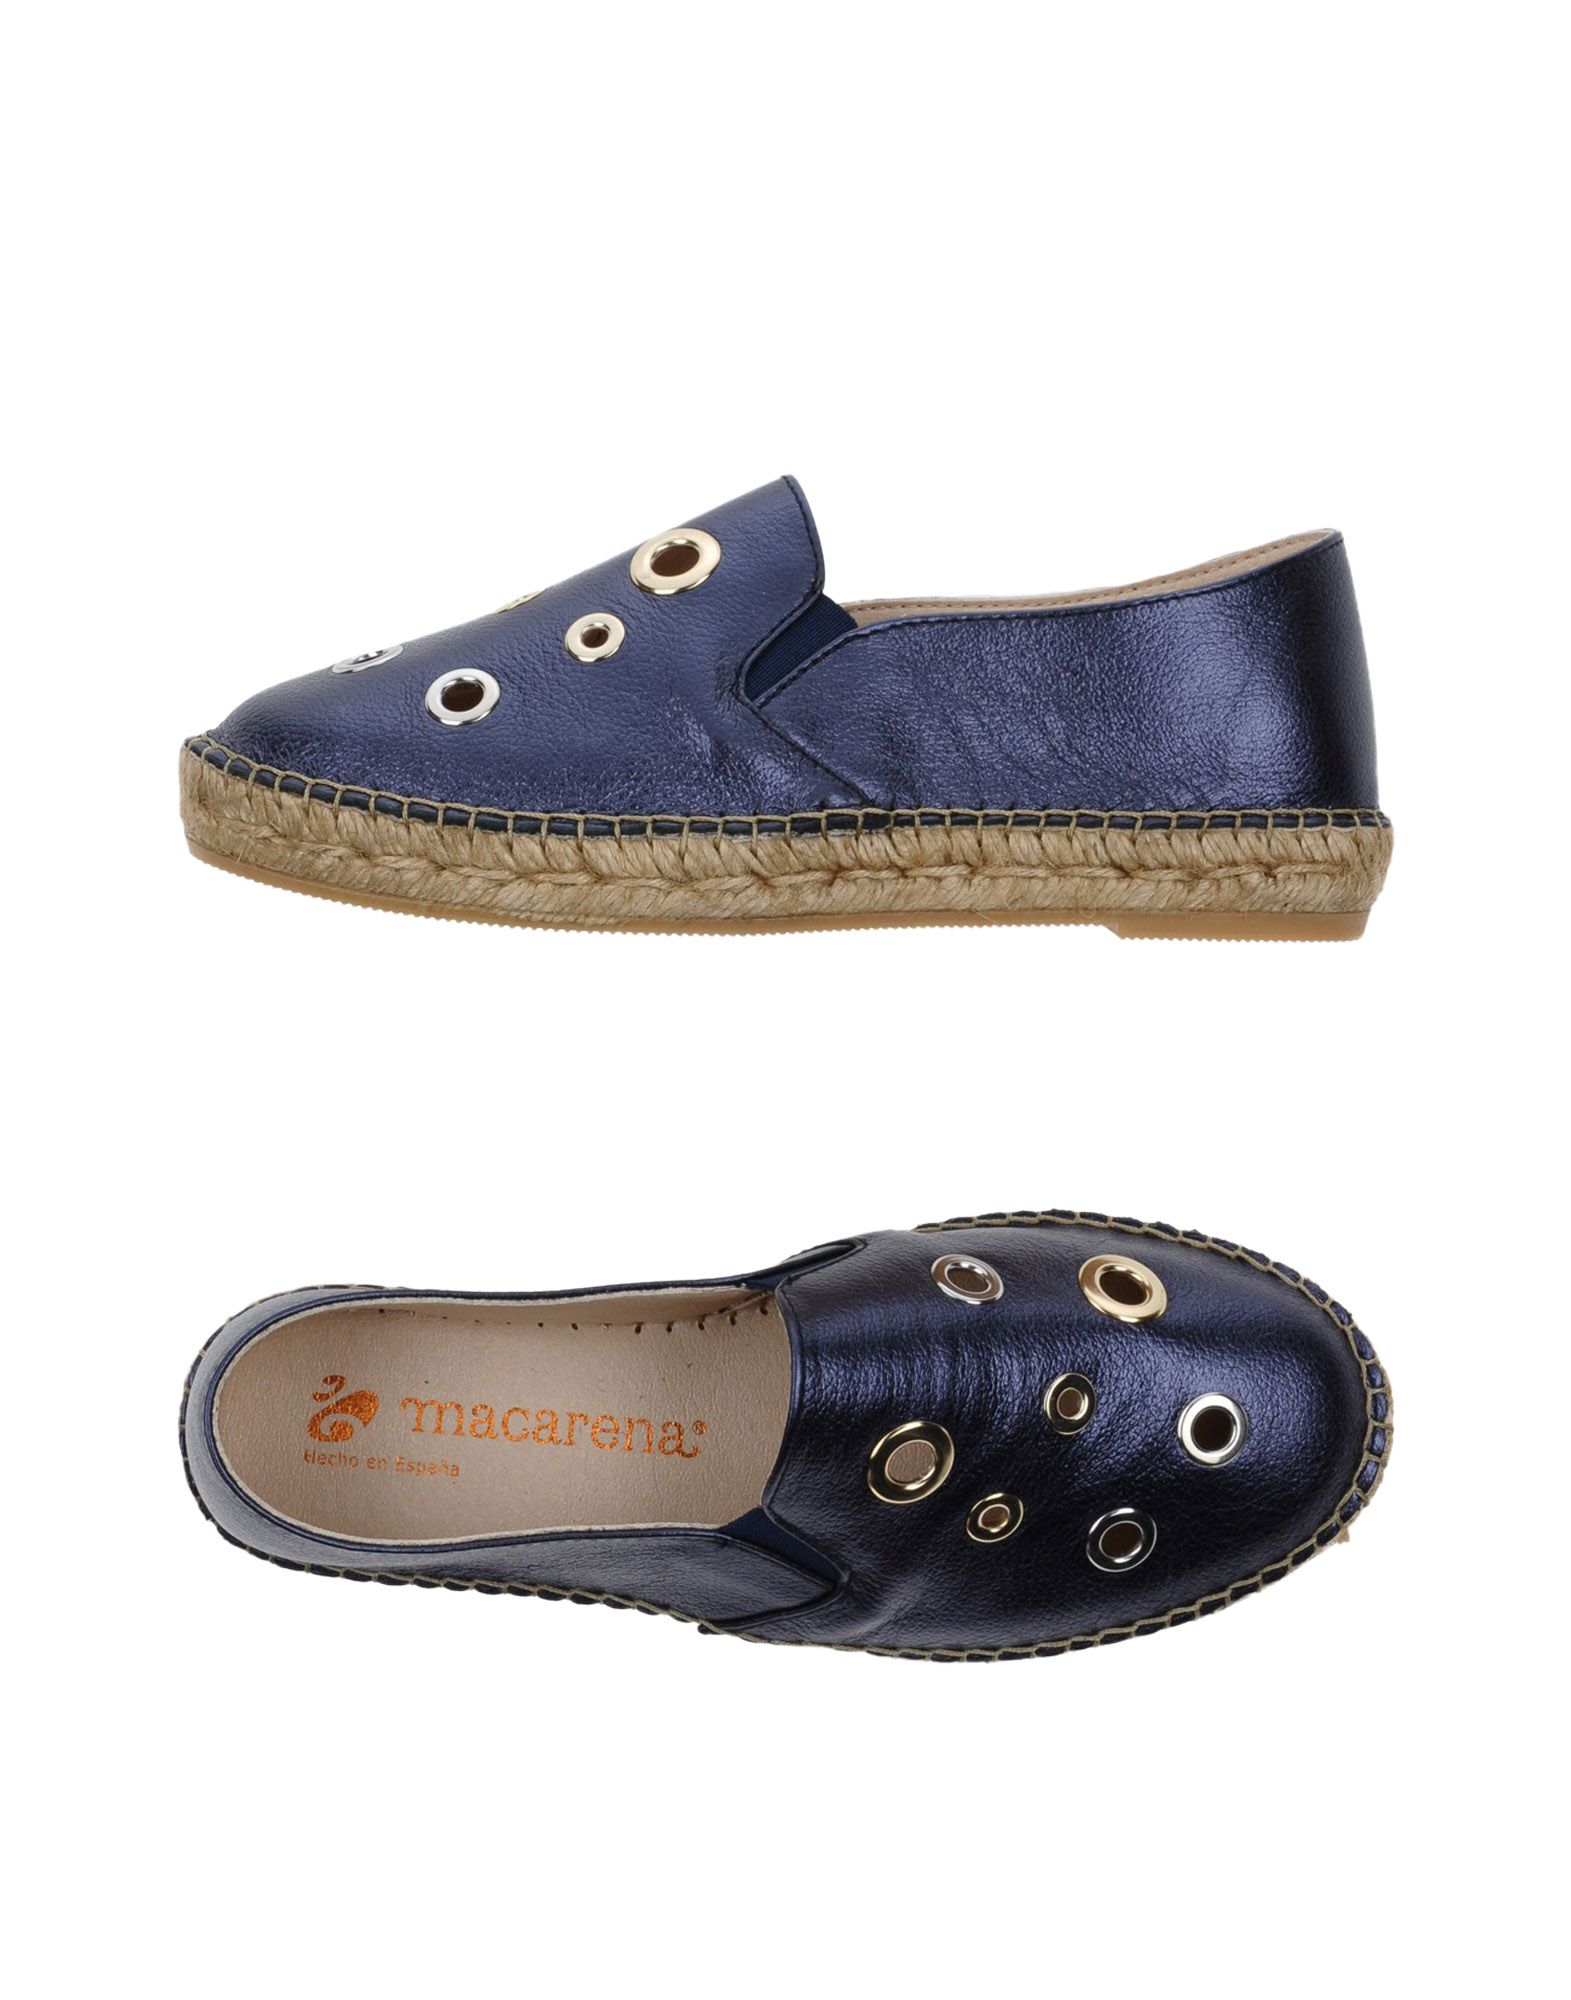 macarena shoes shop online